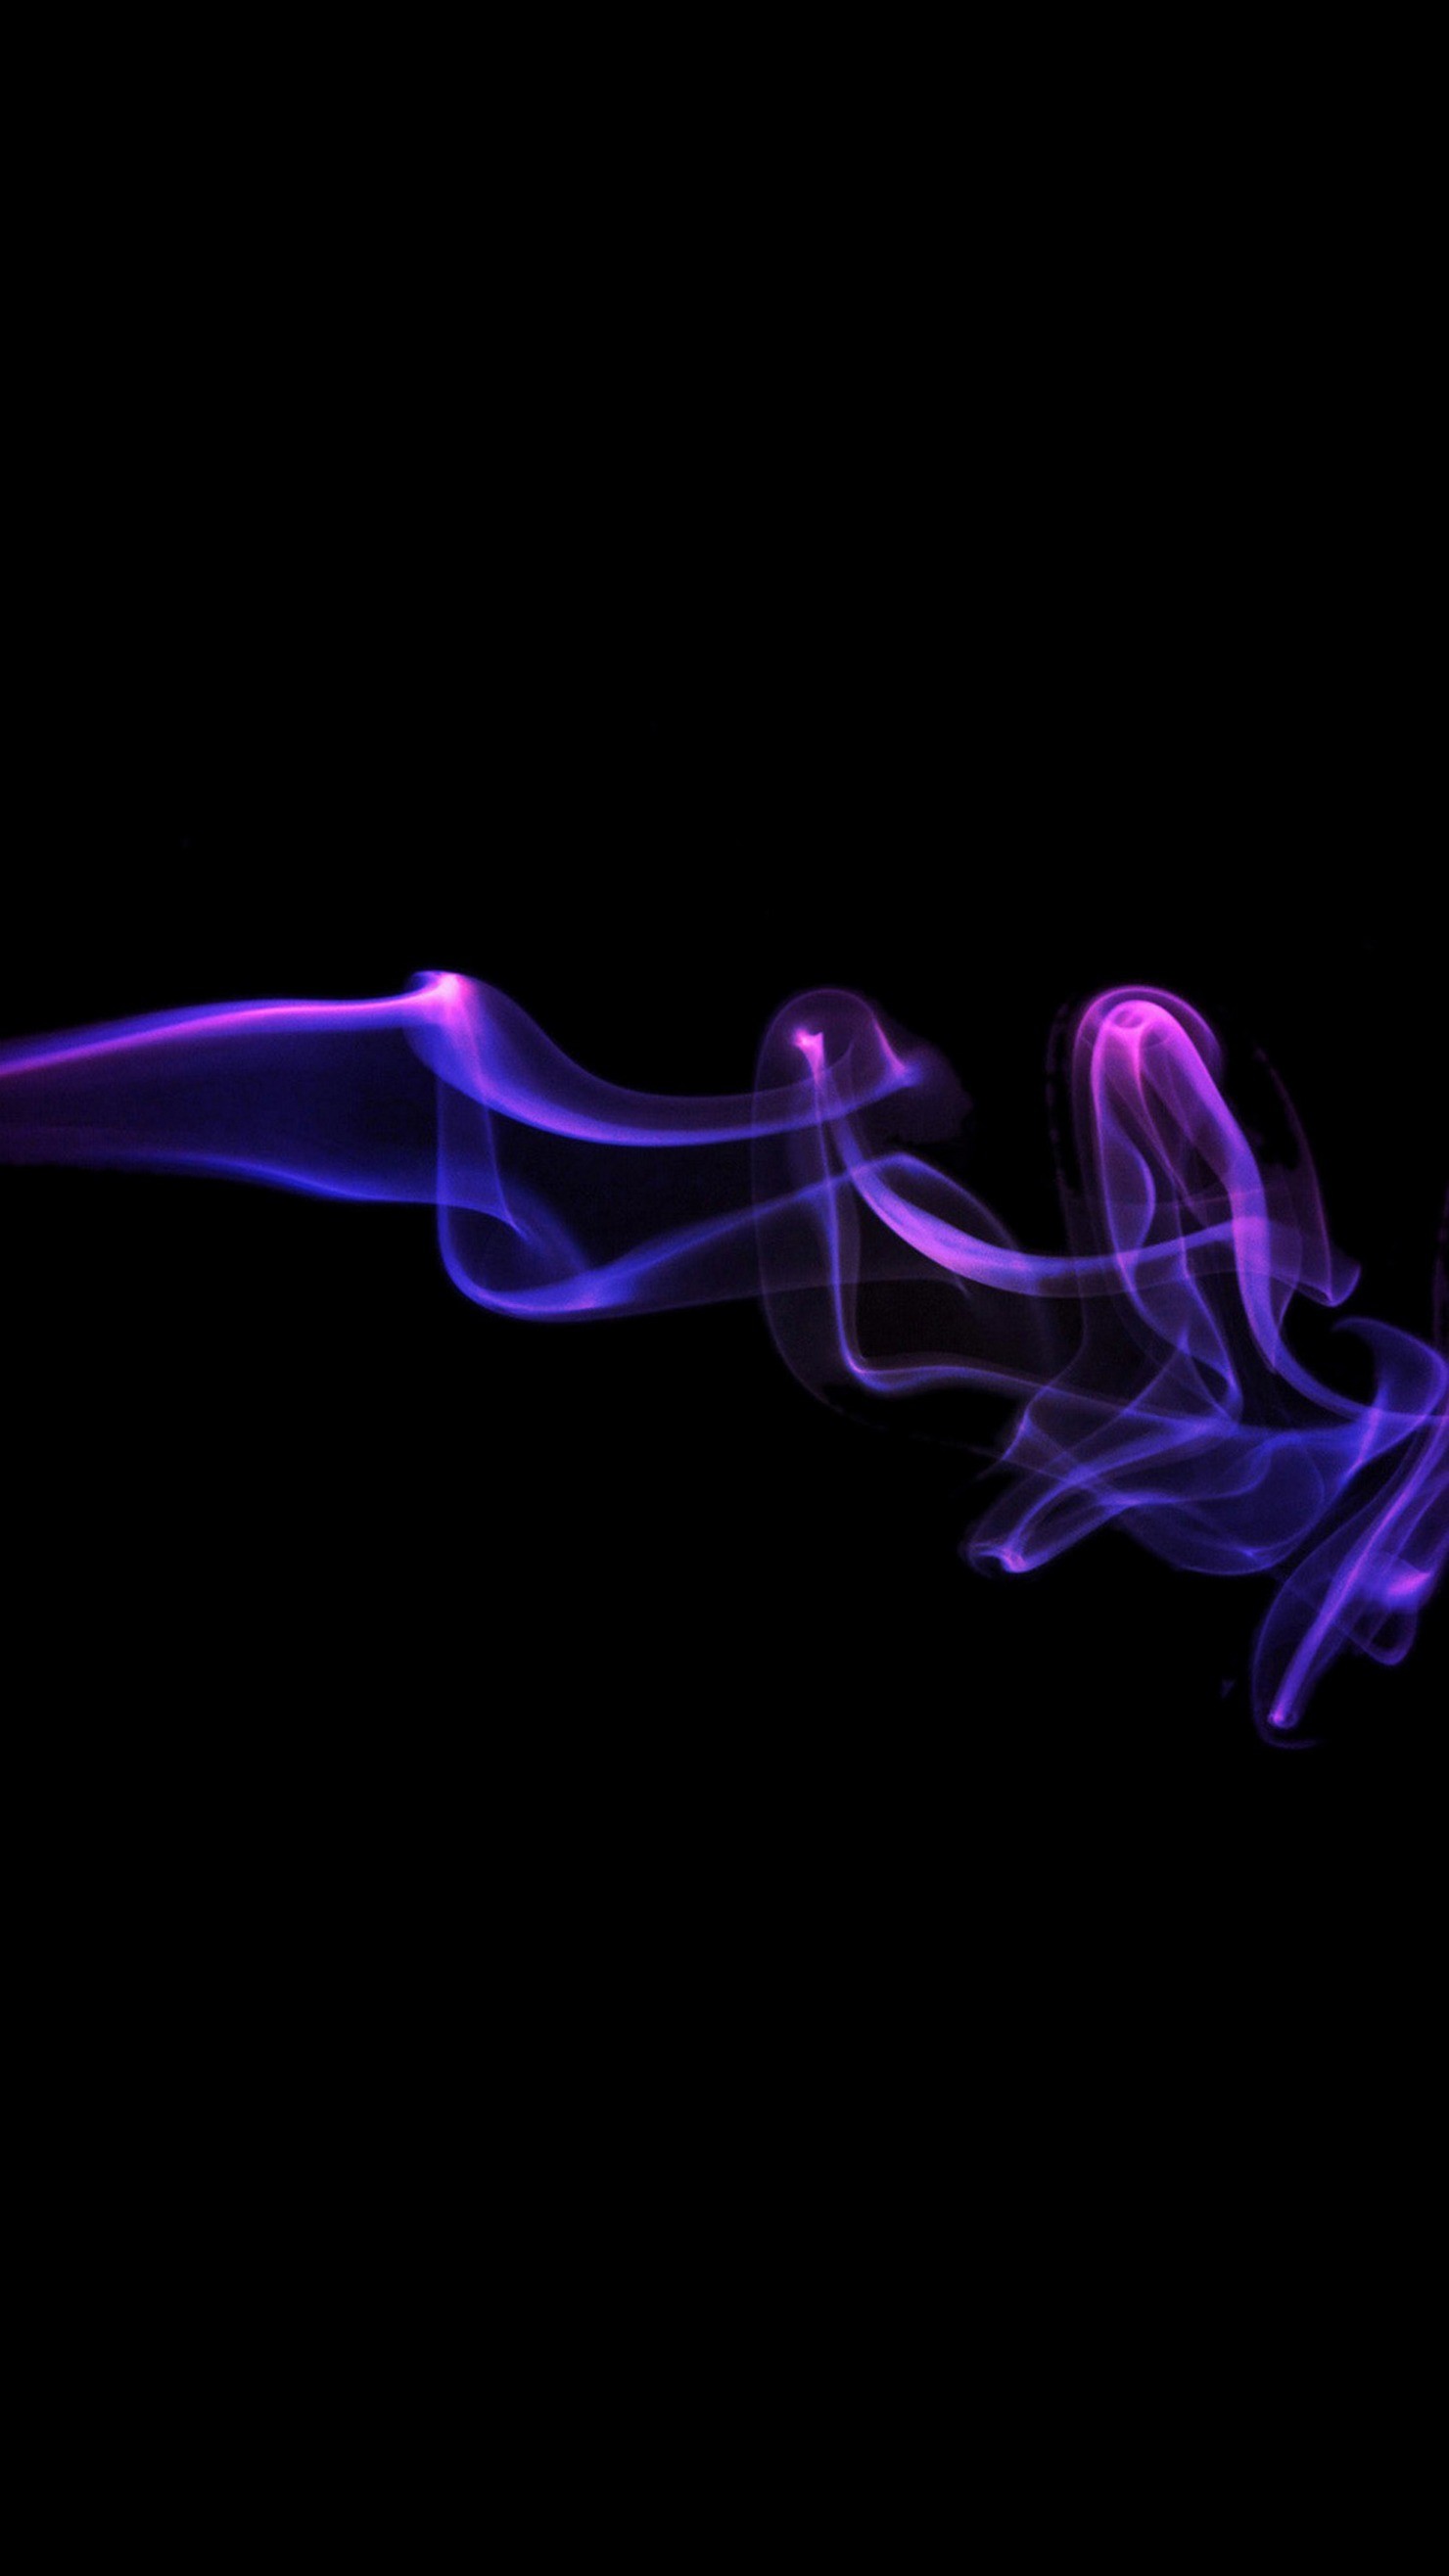 1480x2631 abstract smoke background violet black wallpaper iphone retina